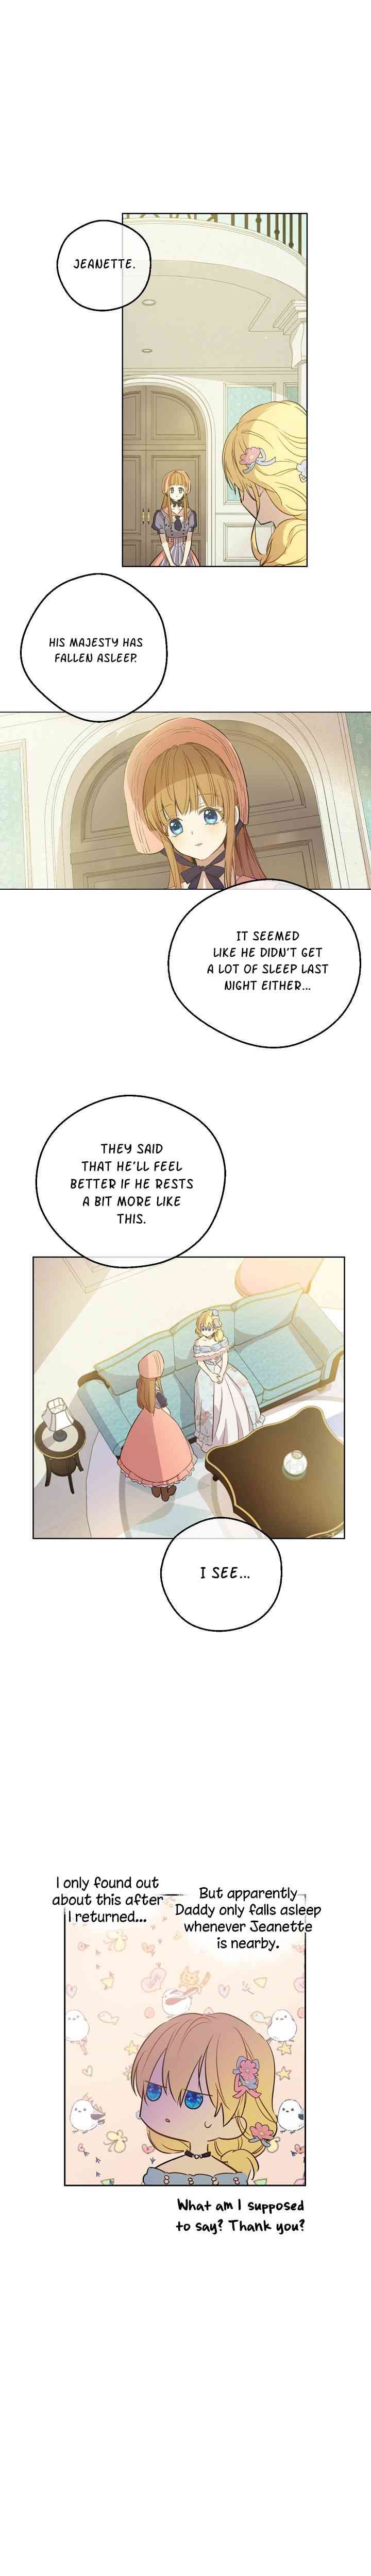 Who Made Me A Princess Chapter 69 page 2